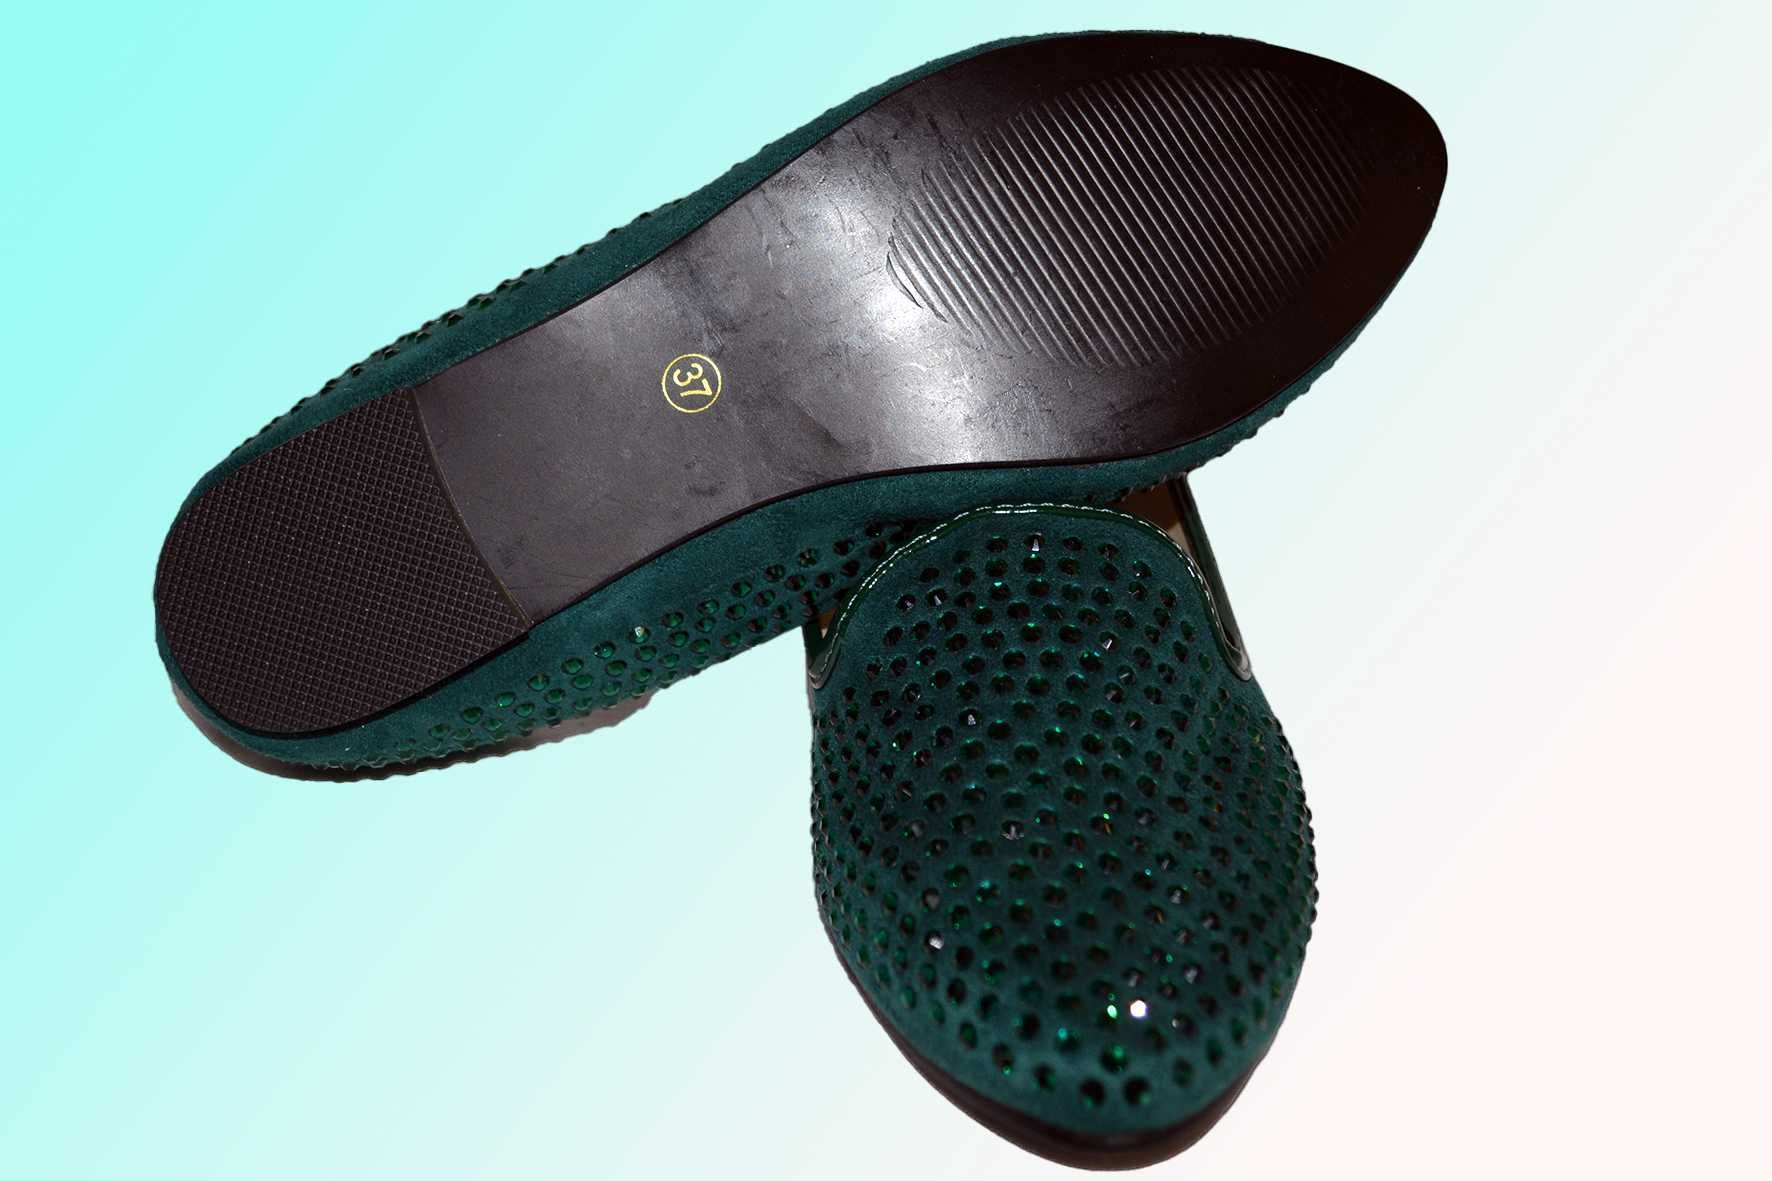 Туфли женские лодочки Liliya 37 размер